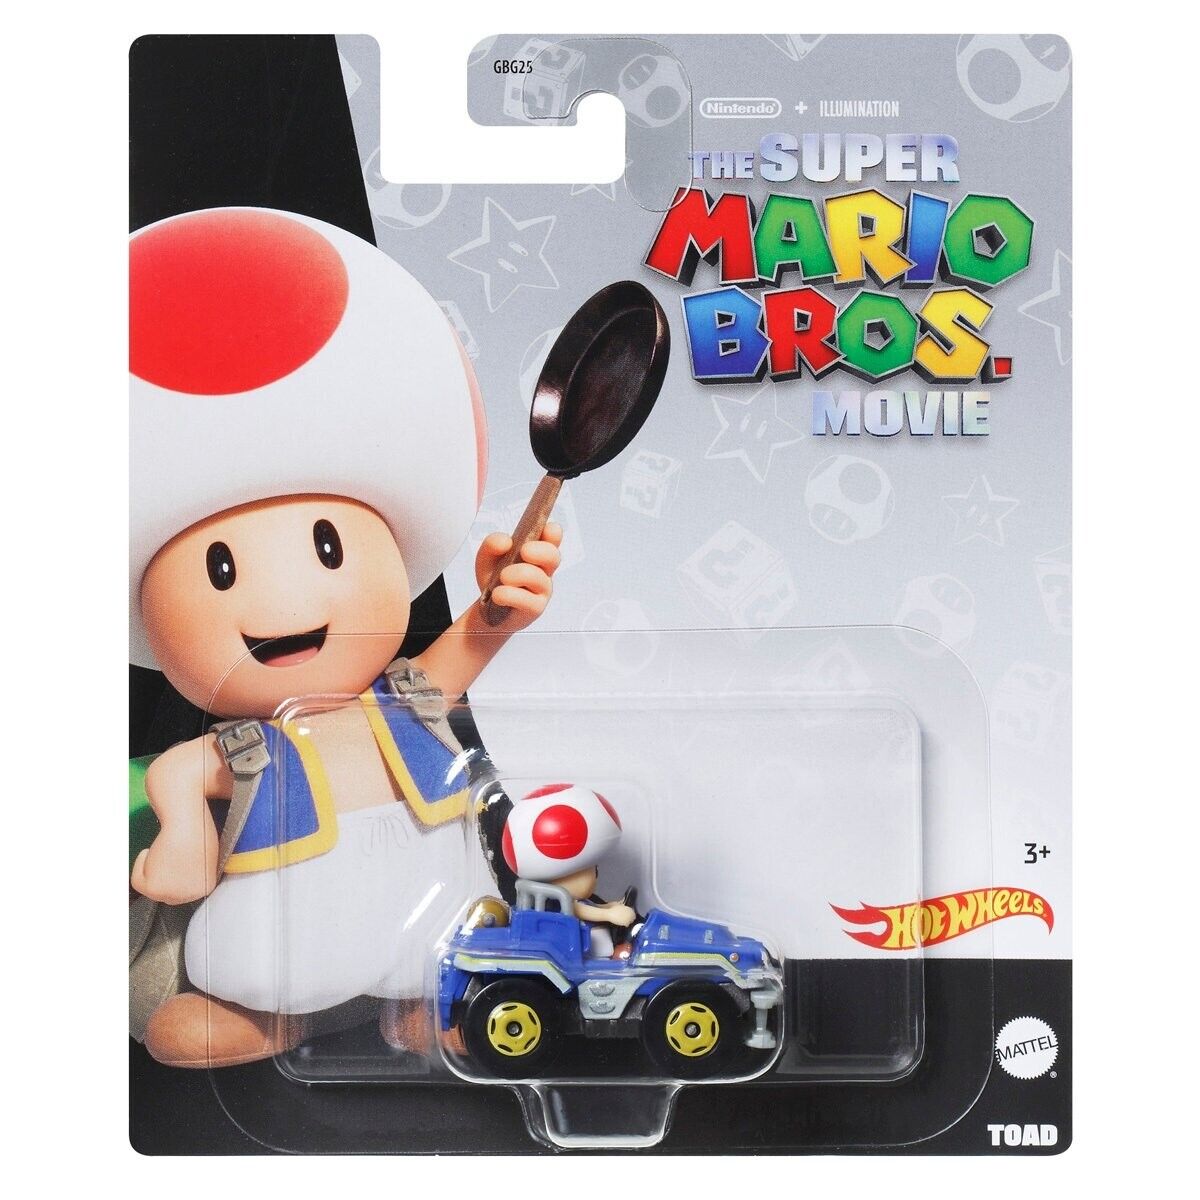 Mario Kart Hot Wheels 2023 Mix 6 Vehicle Case of 8